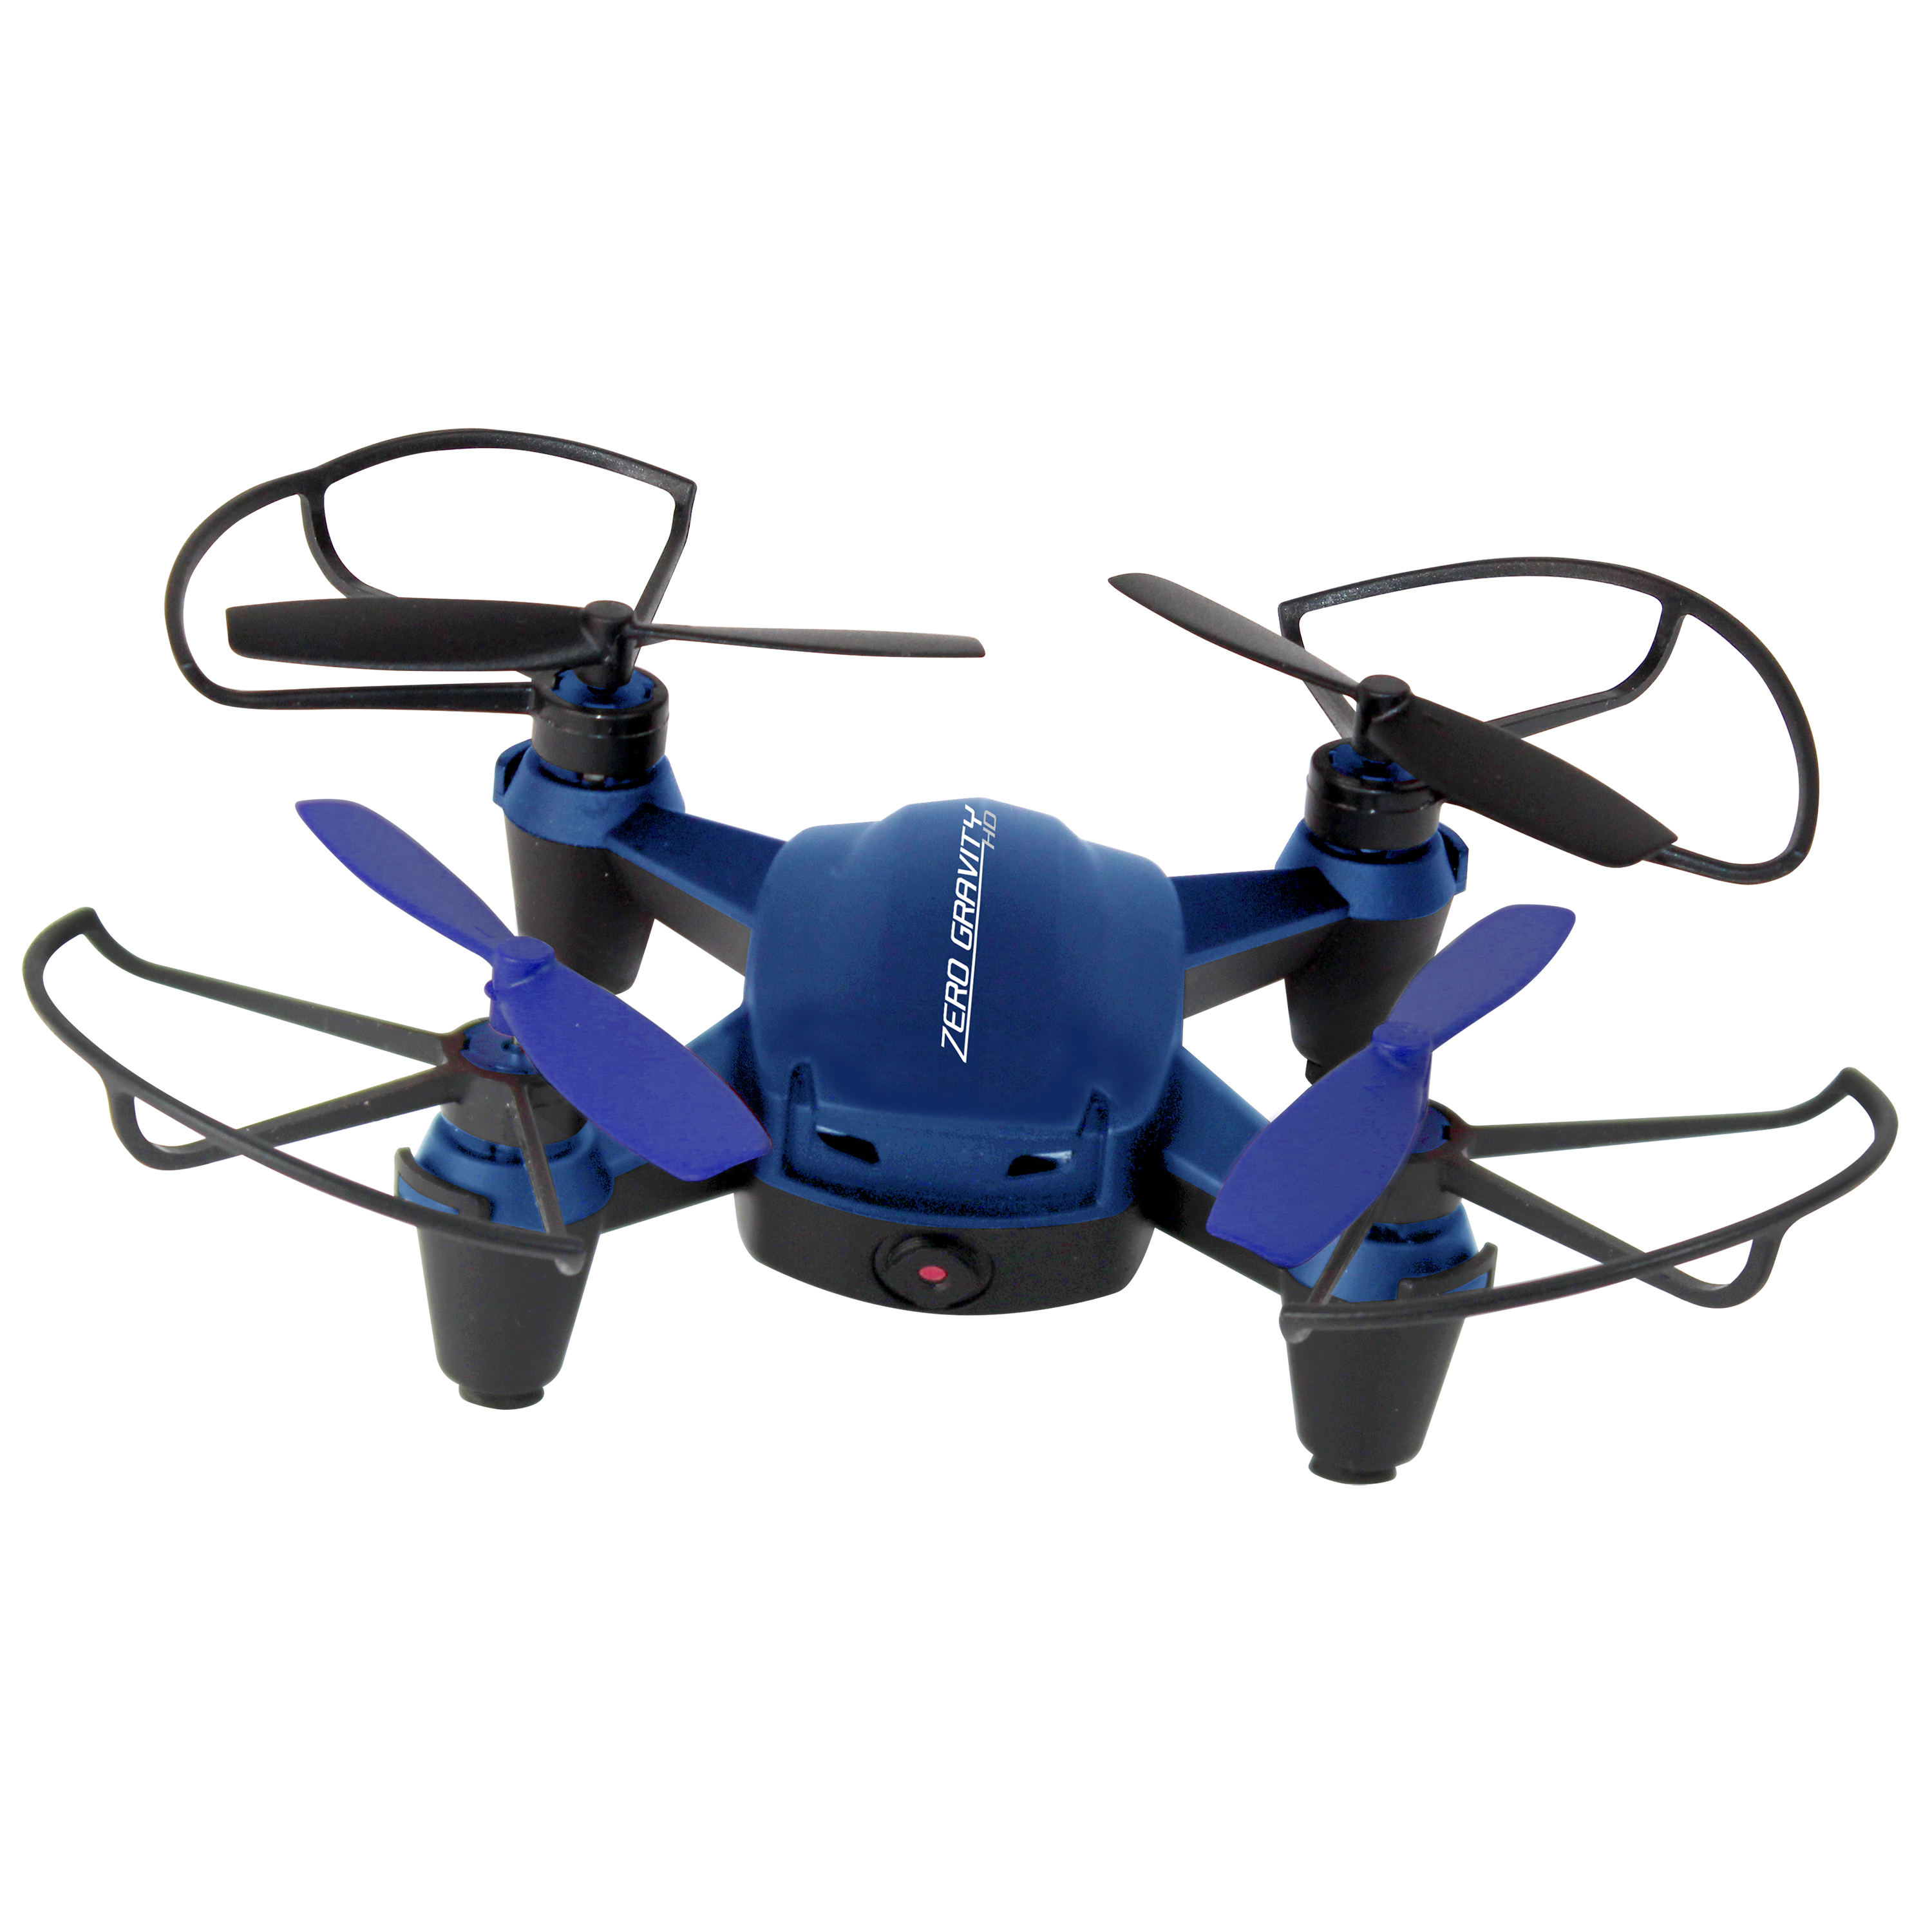 Zero Gravity HD Quad Drone Only $39.95!